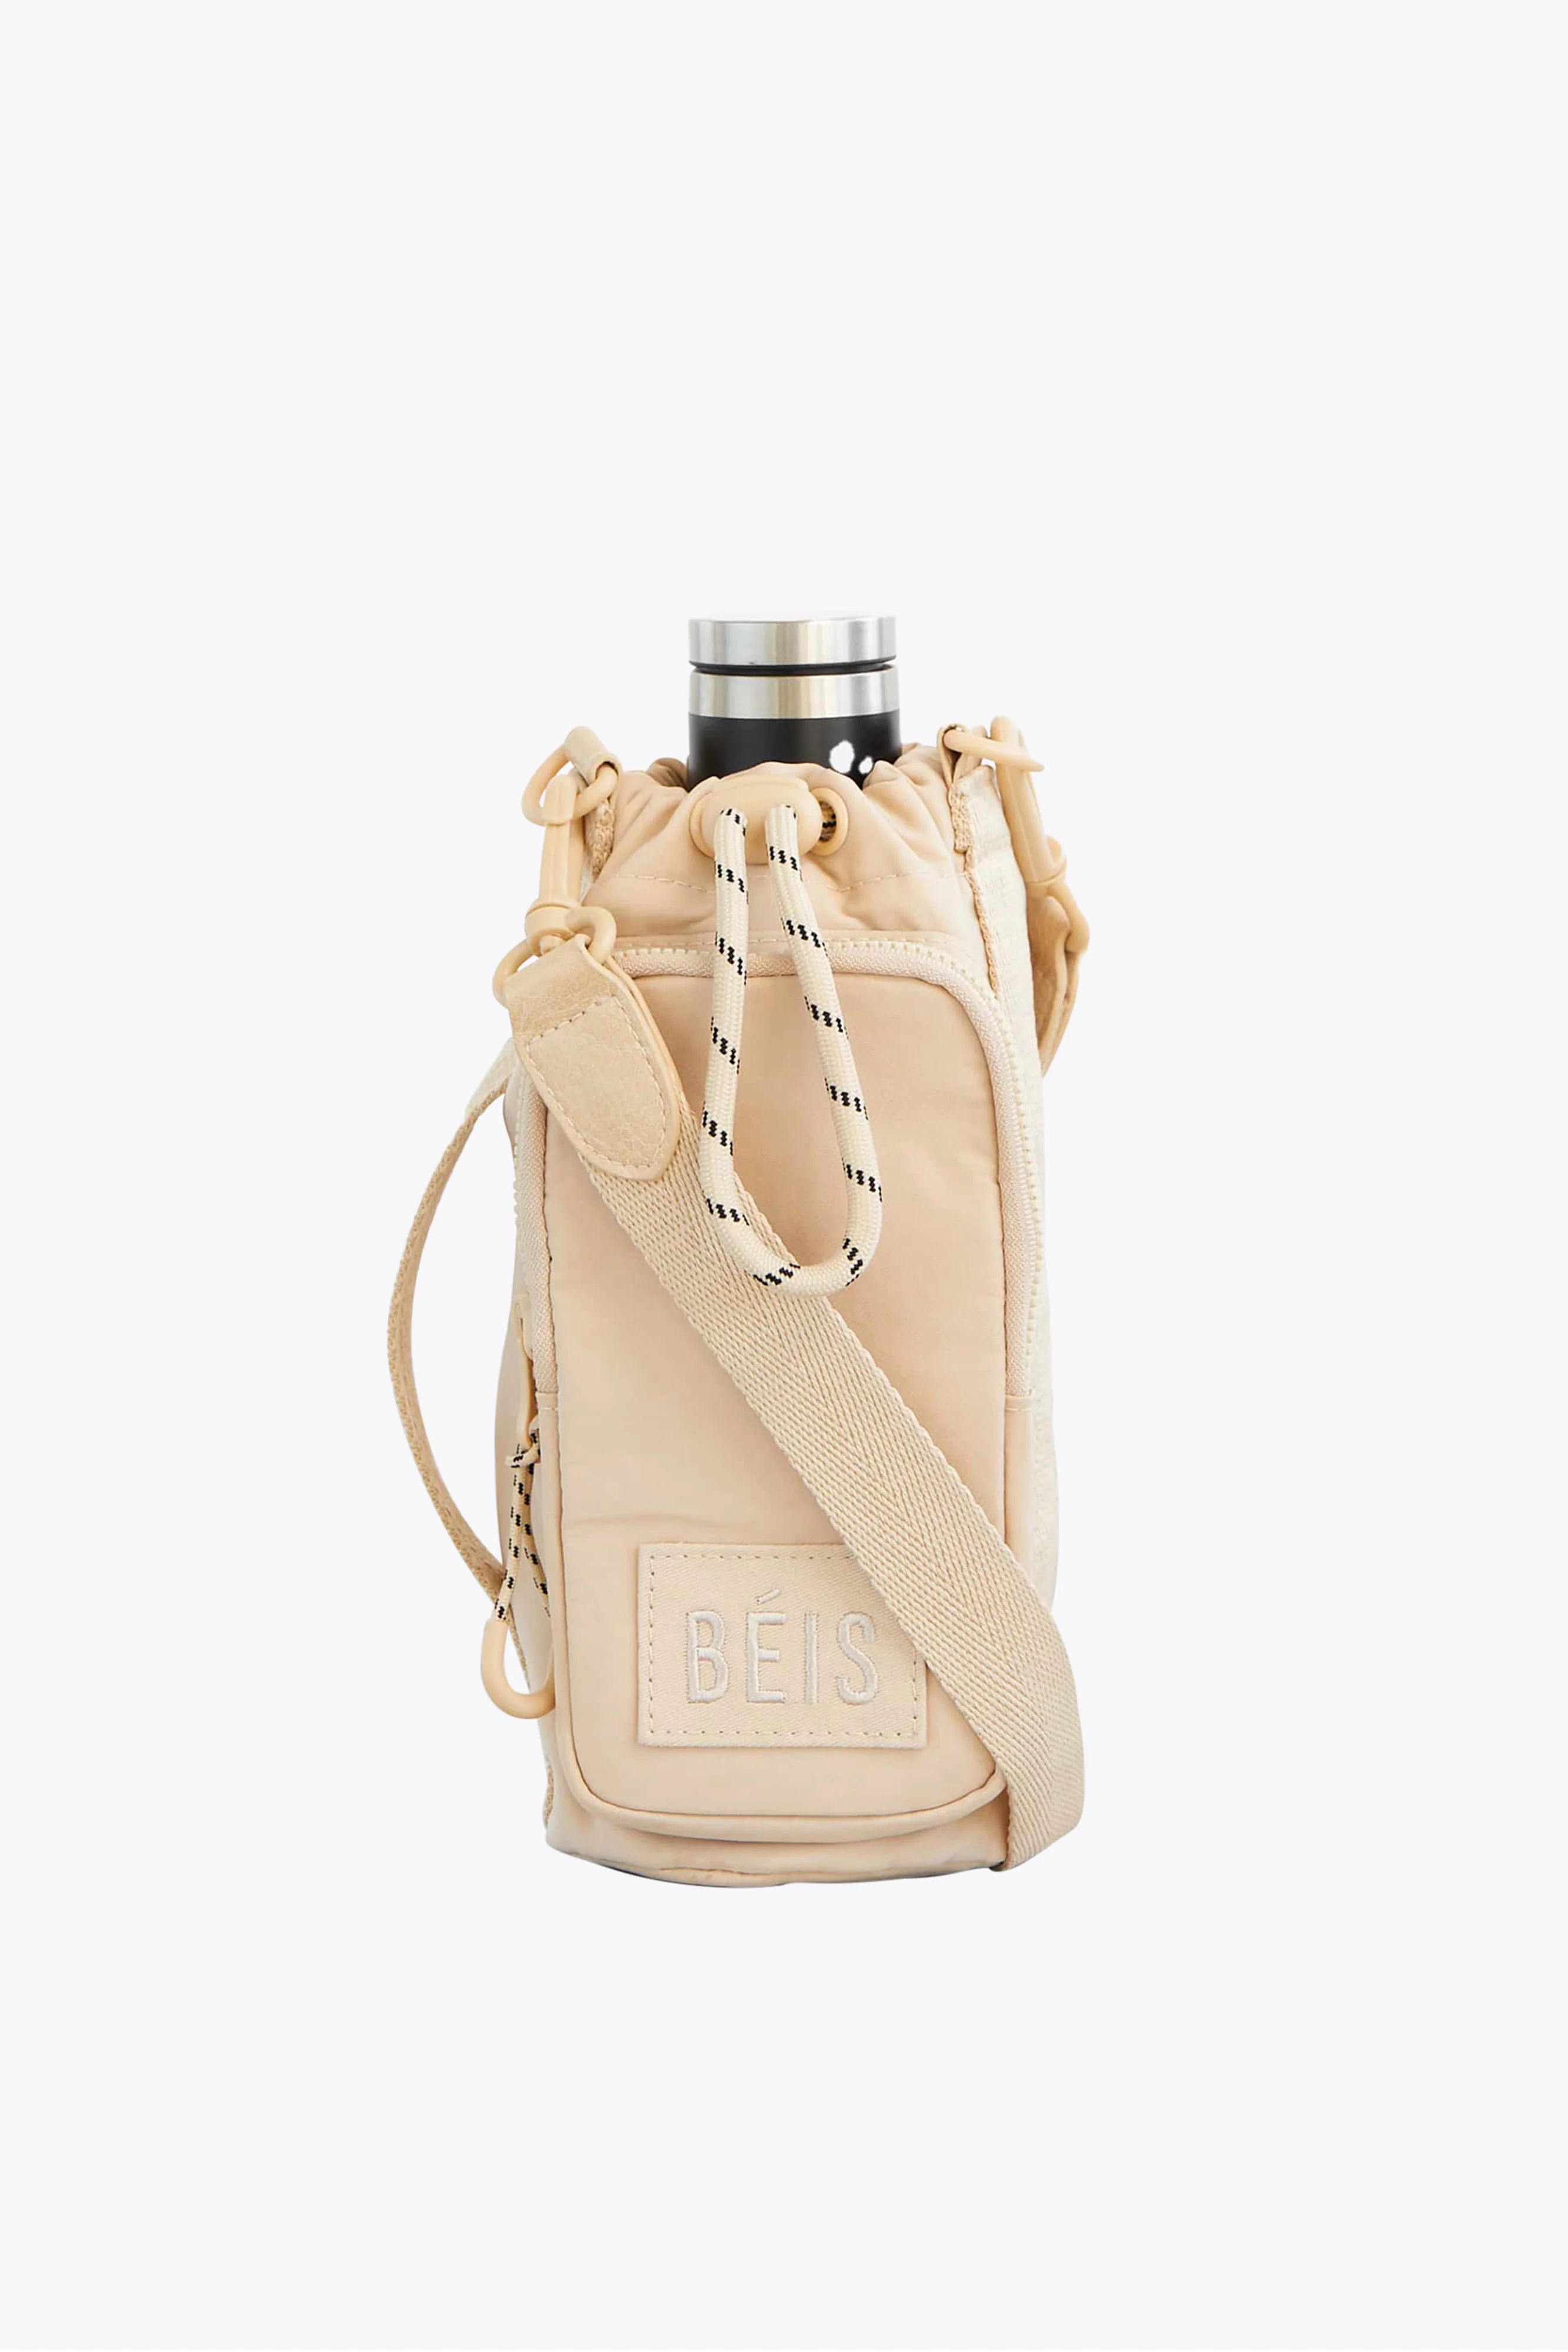 The Water Bottle Sling in Beige | BÉIS Travel